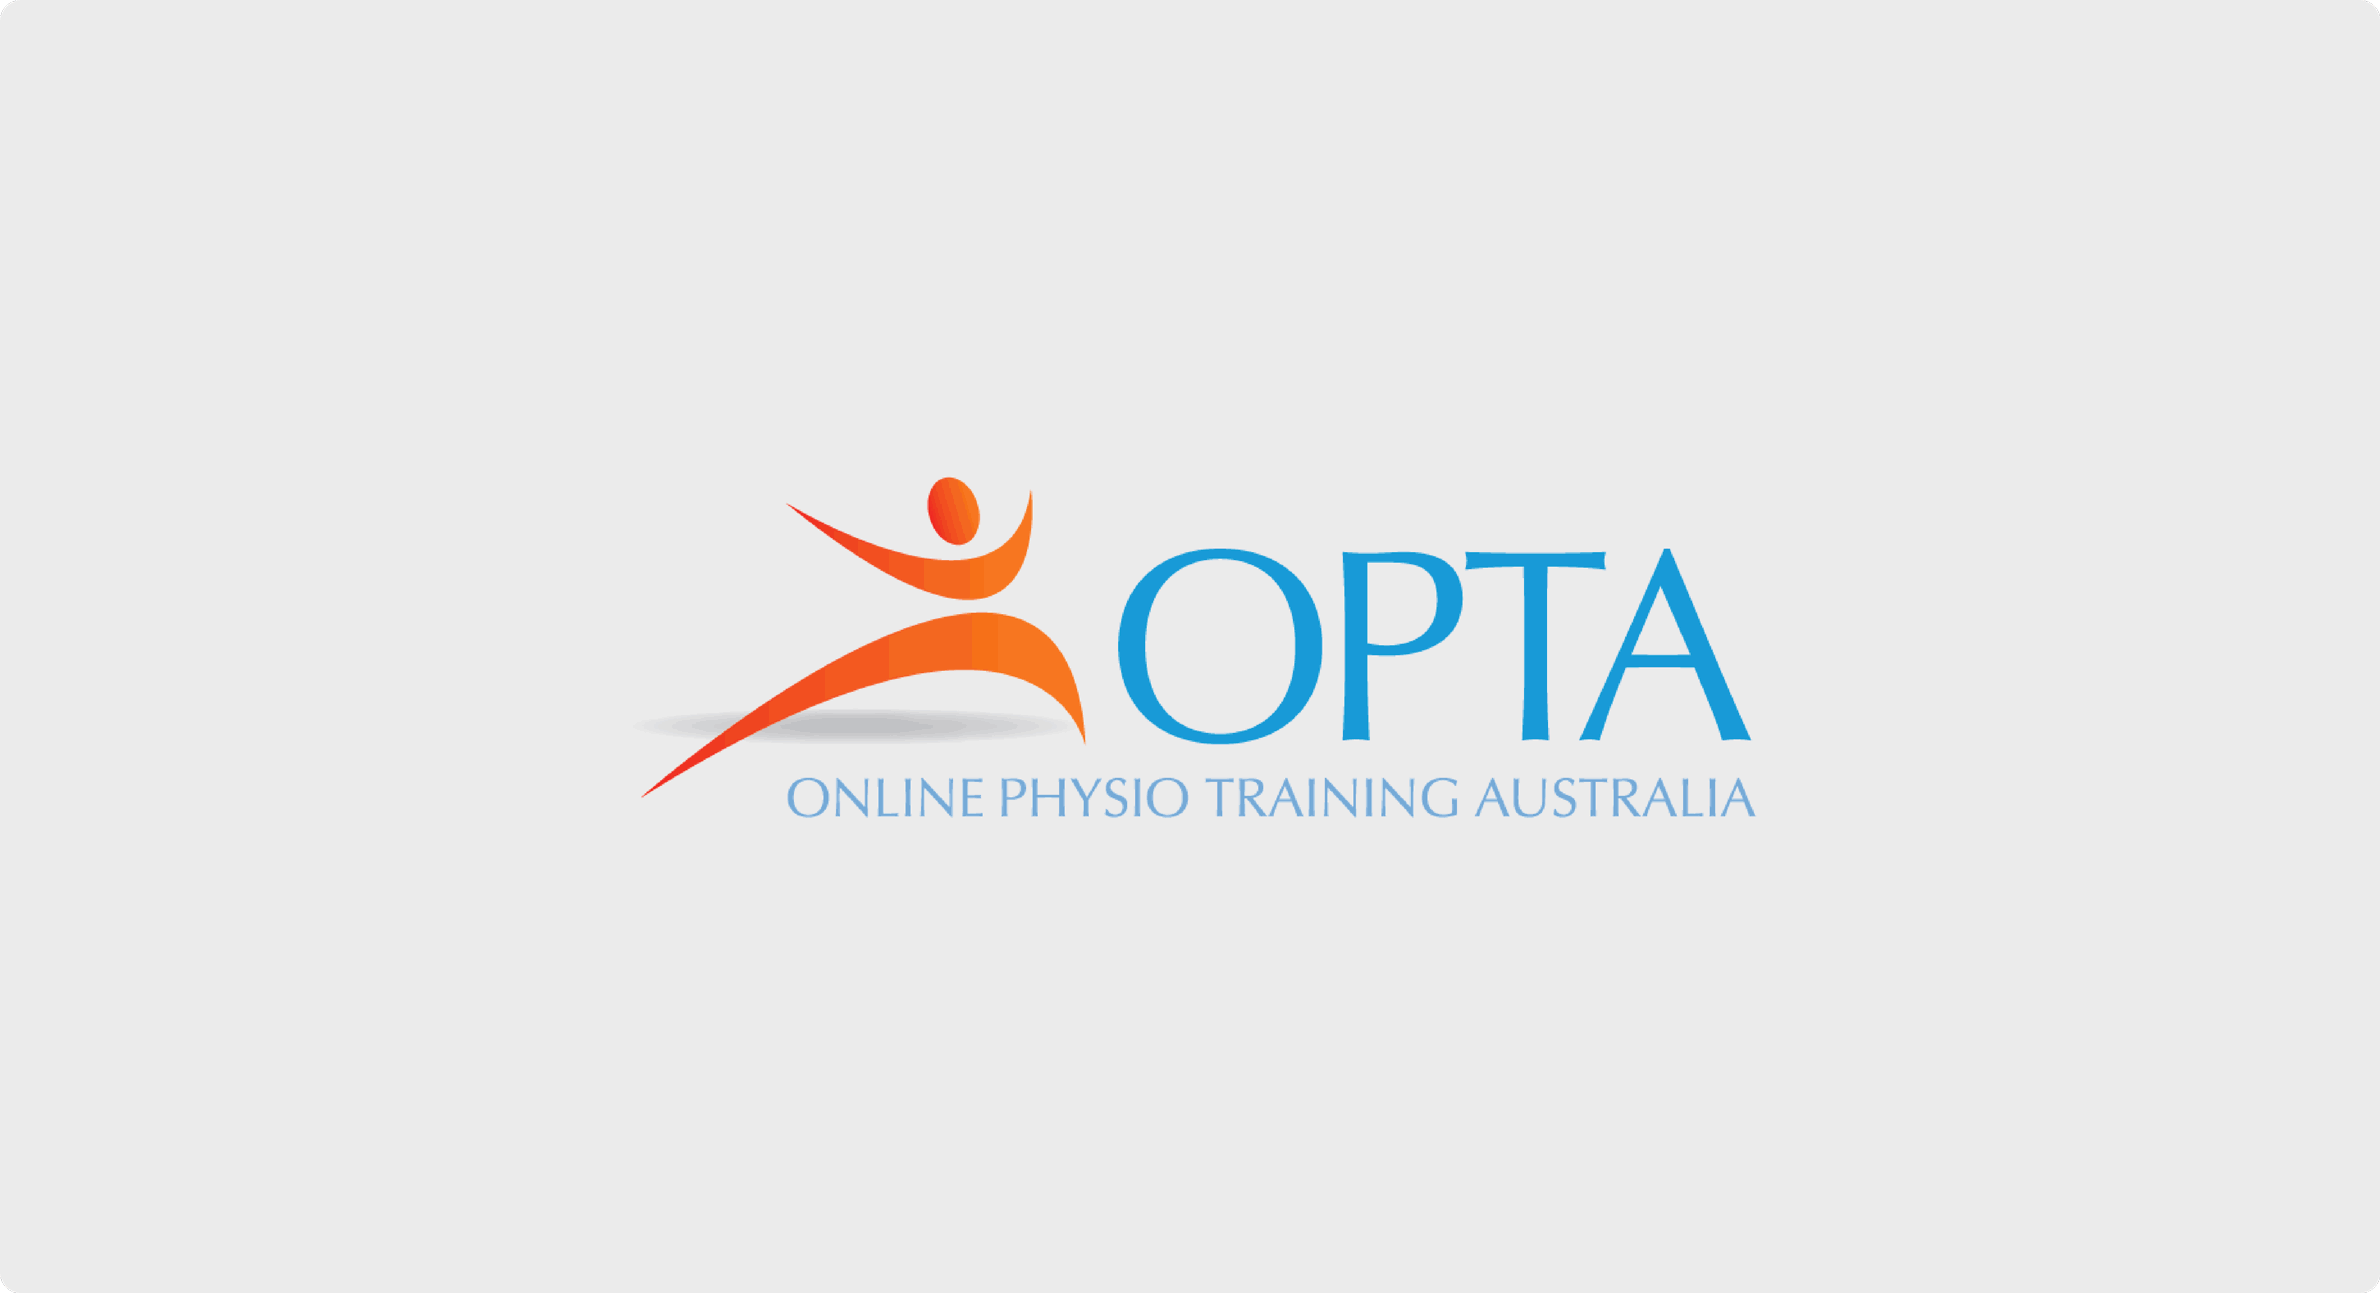 Online Physio Training Australia